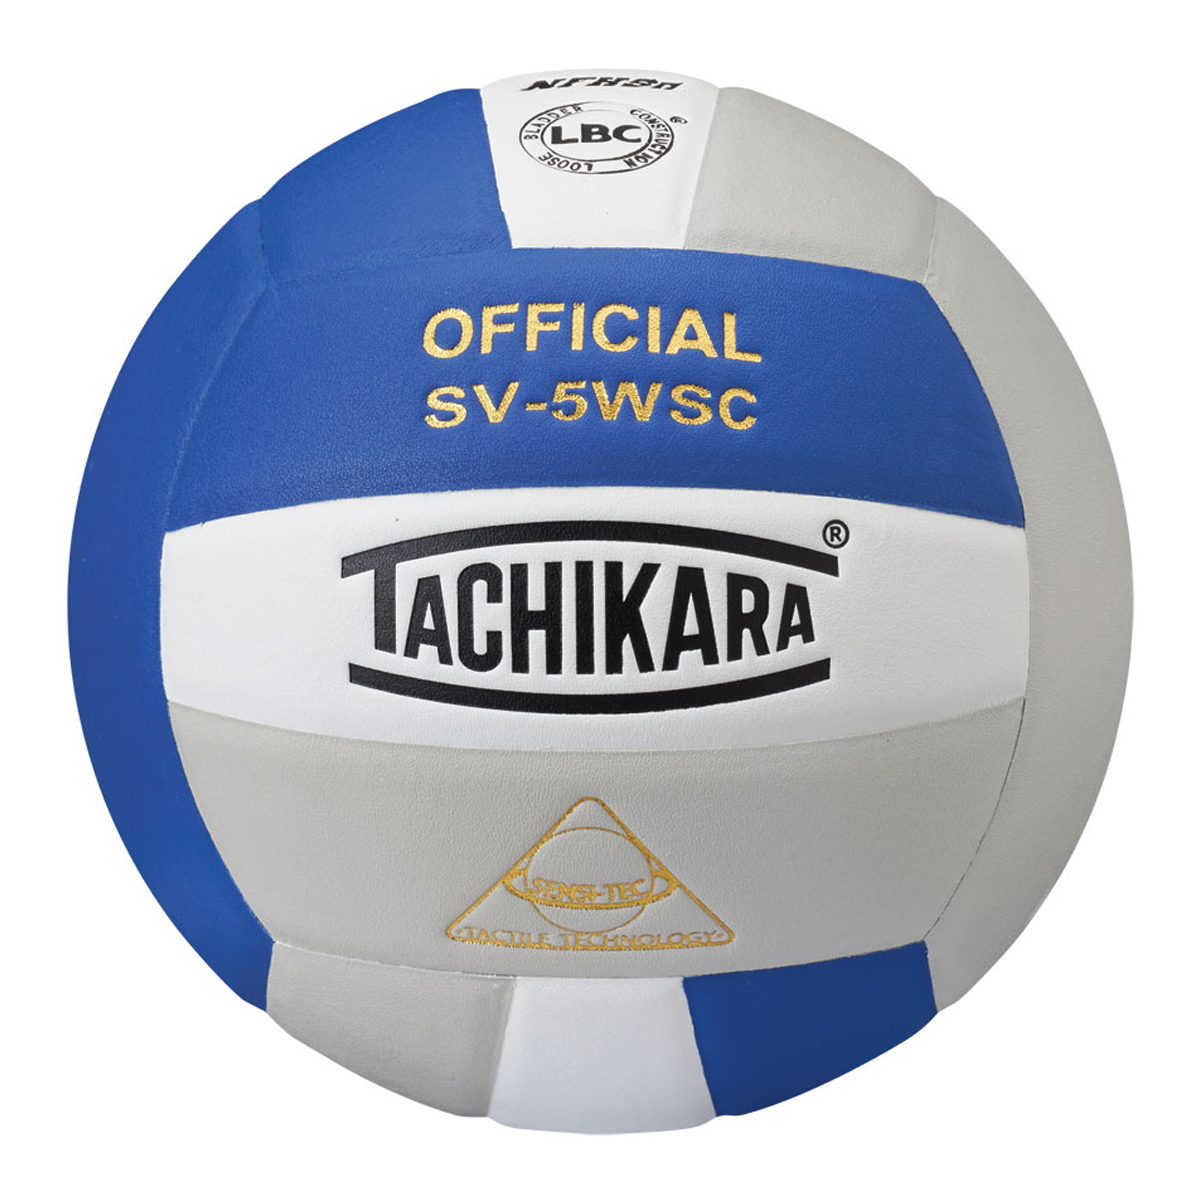 Tachikara SV5WSC Composite Volleyball-Royal, White & Silver